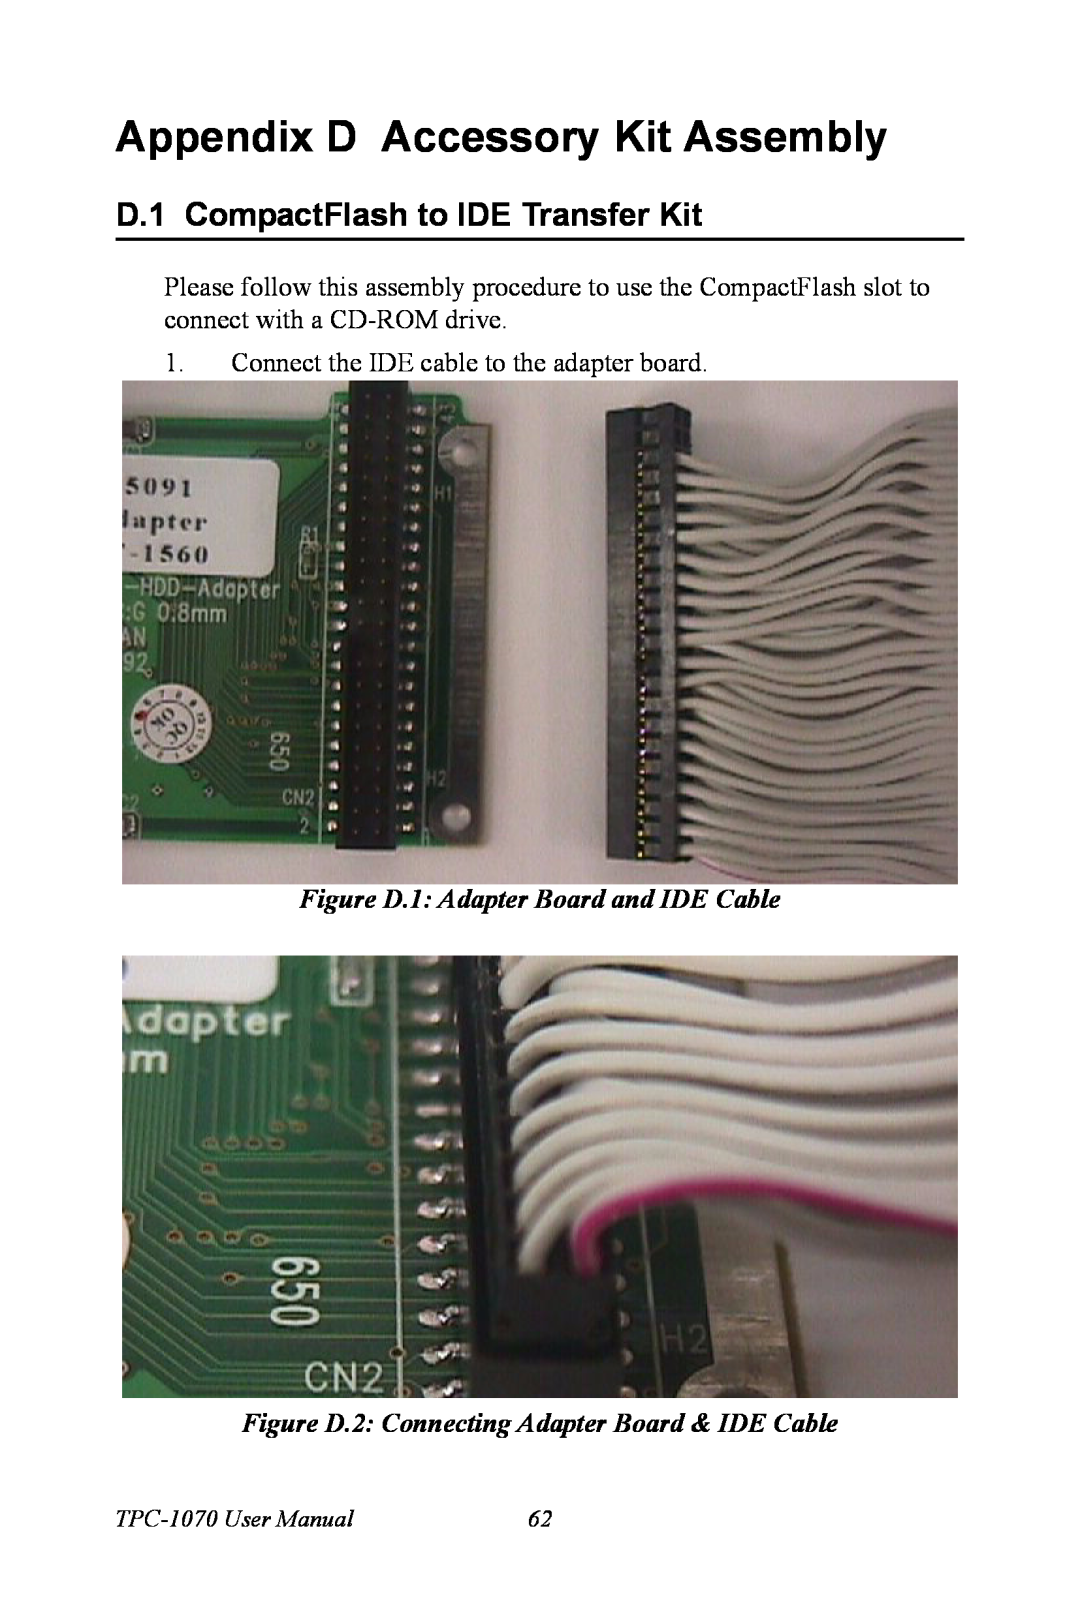 Intel user manual Appendix D Accessory Kit Assembly, D.1 CompactFlash to IDE Transfer Kit, TPC-1070 User Manual 